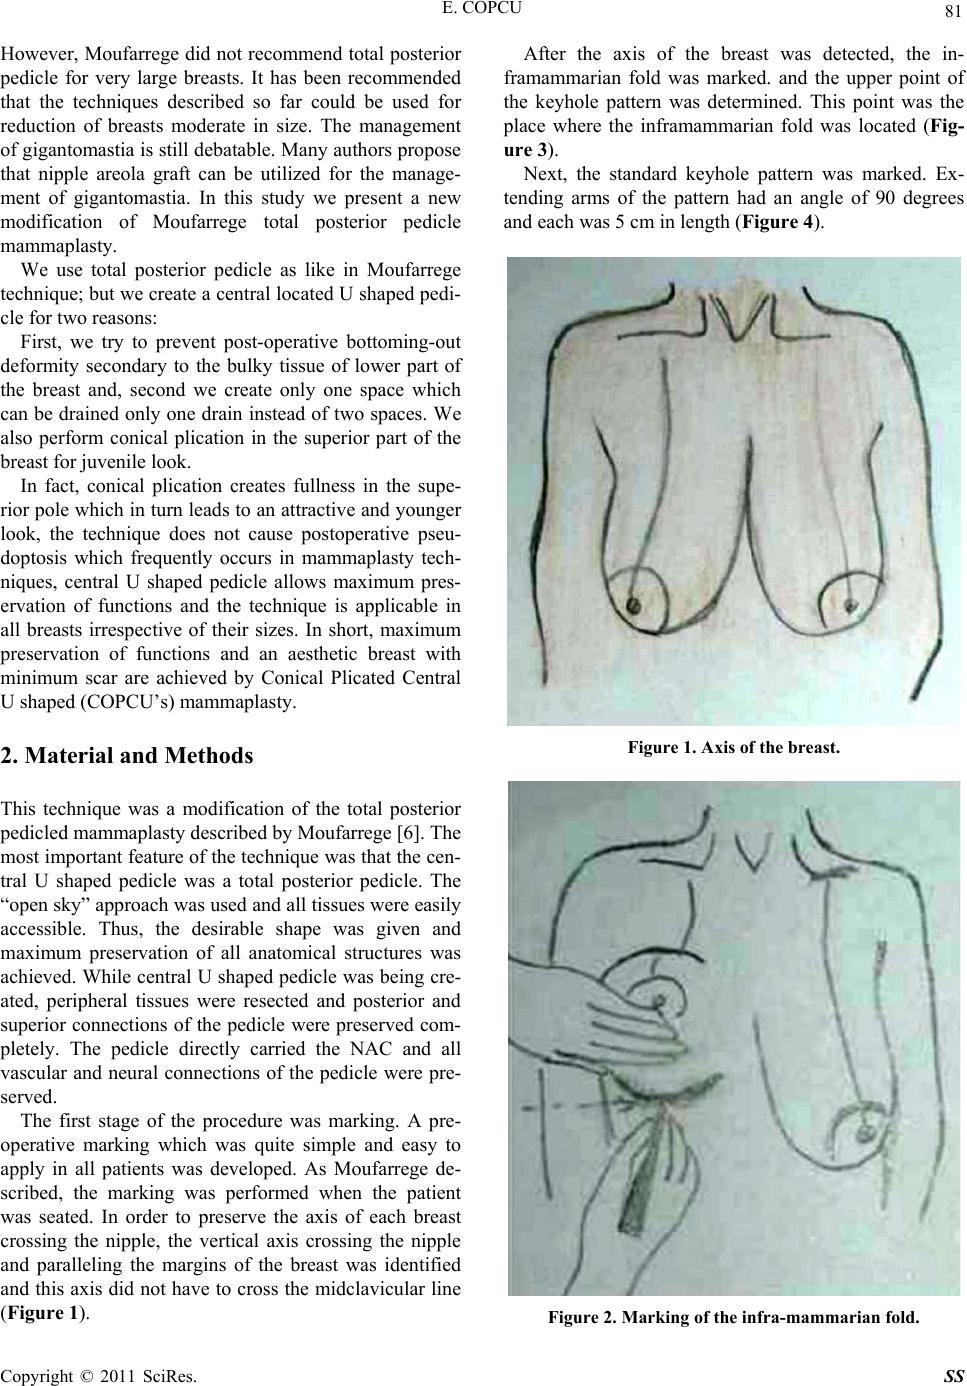 Modification of Moufarrege Total Posterior Pedicle Mammaplasty